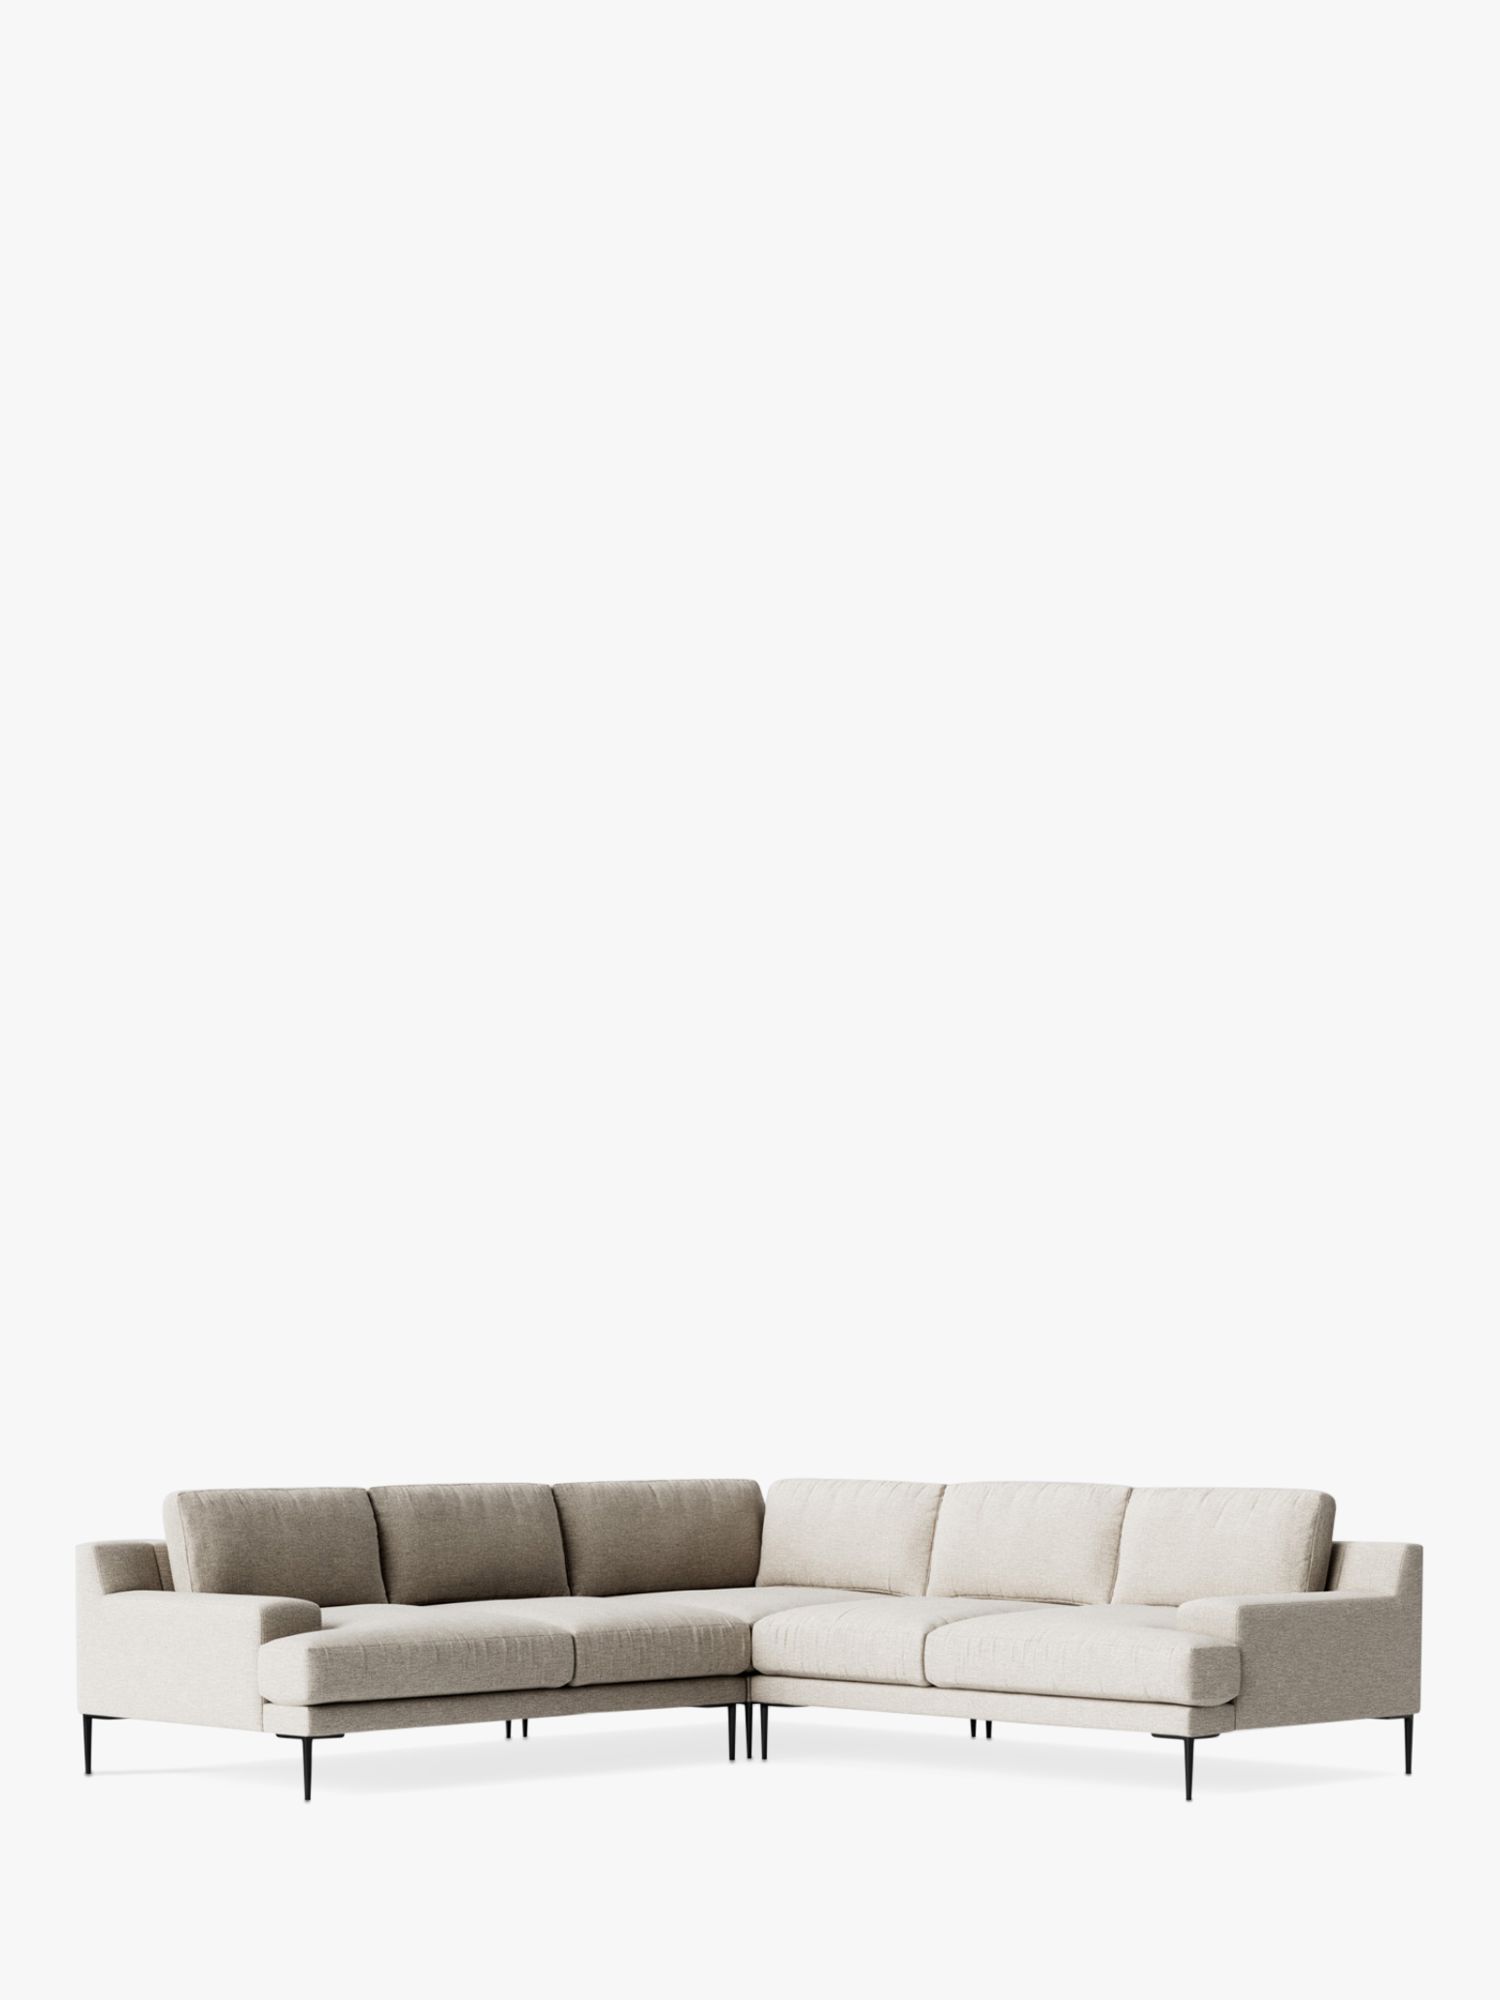 Almera Range, Swoon Almera 5 Seater Corner Sofa, Metal Leg, House Weave Chalk